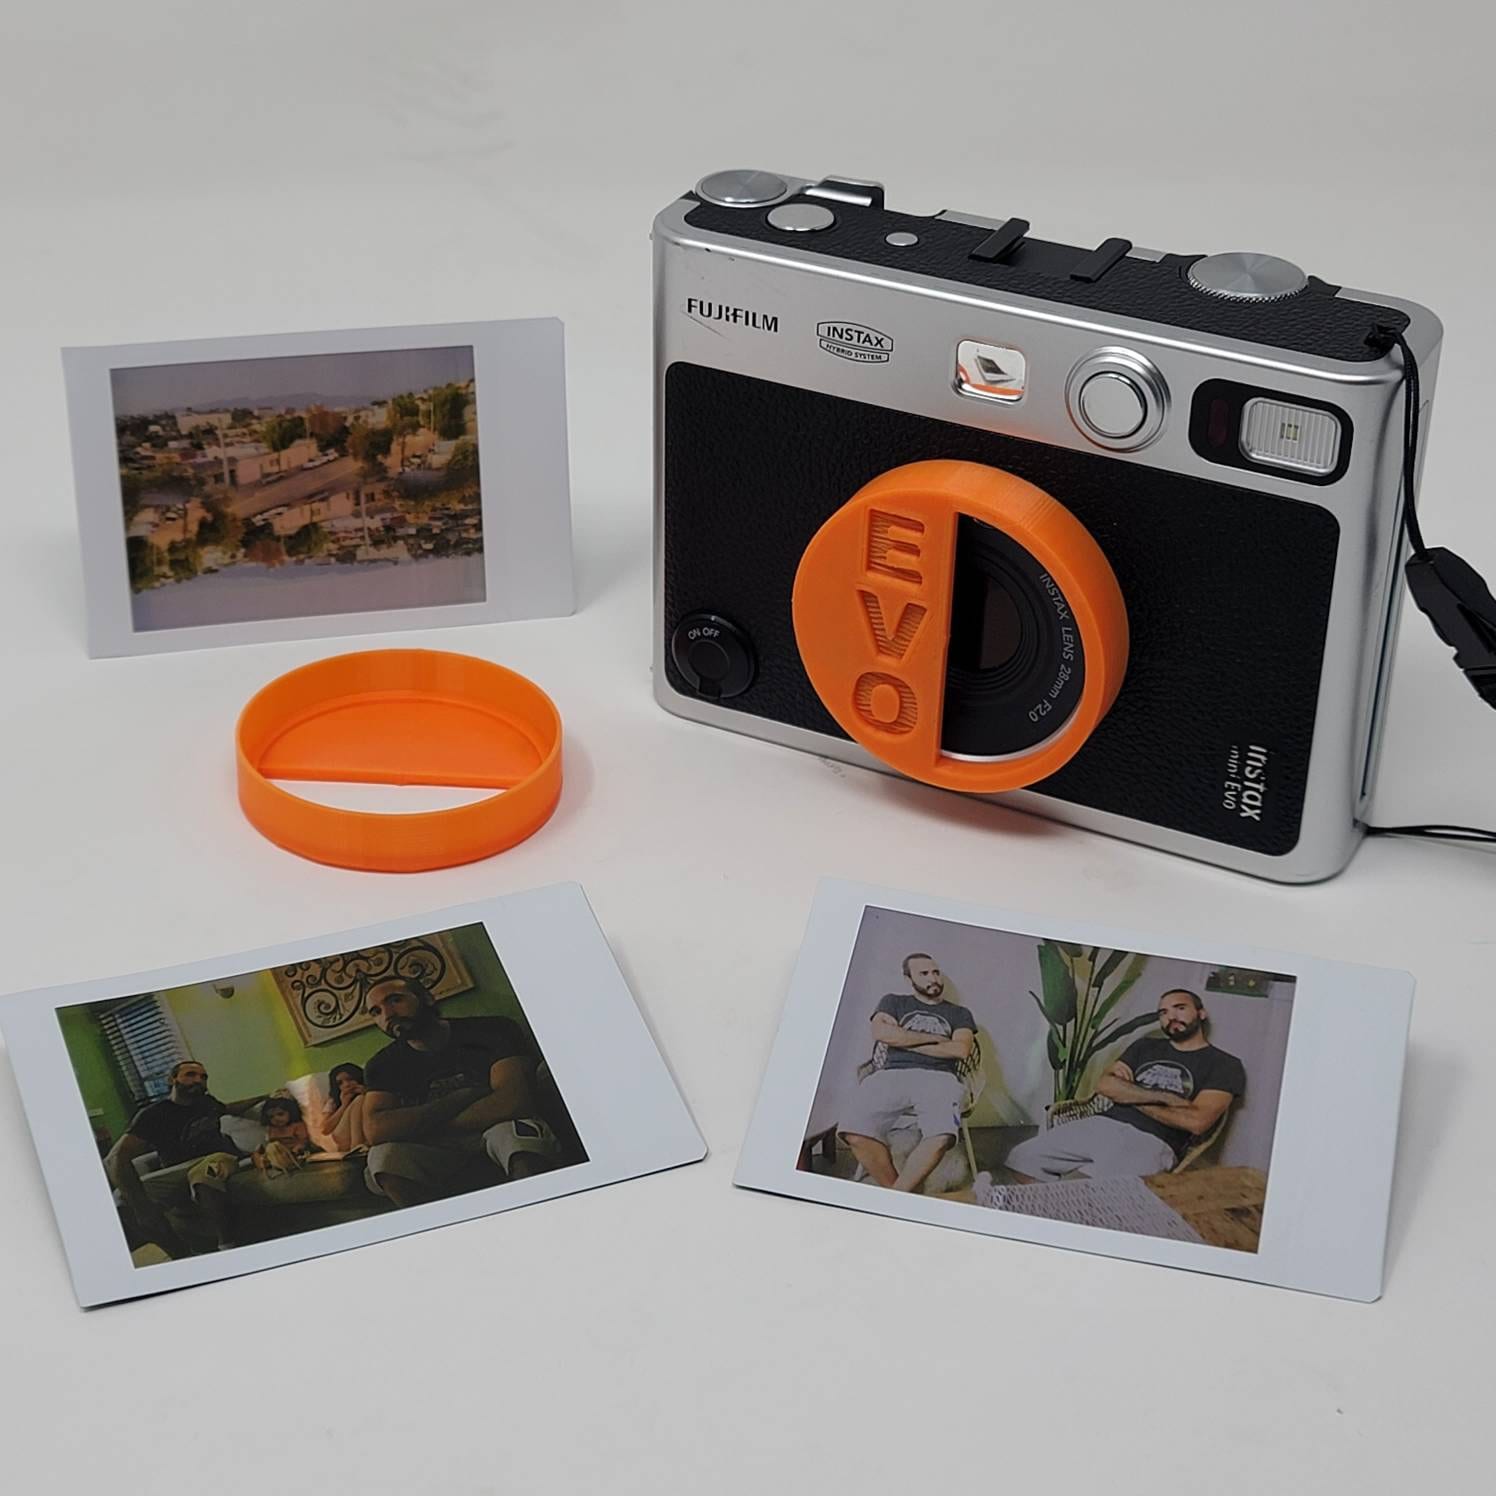 Fujifilm Instax Mini Film Soft Lavender 10 Sheets. for Fujifilm Instax Mini  12, 11, 40, 7s, 8, 9, 25, 50s, 70, 90, Evo. Instant Film 2x3in. 